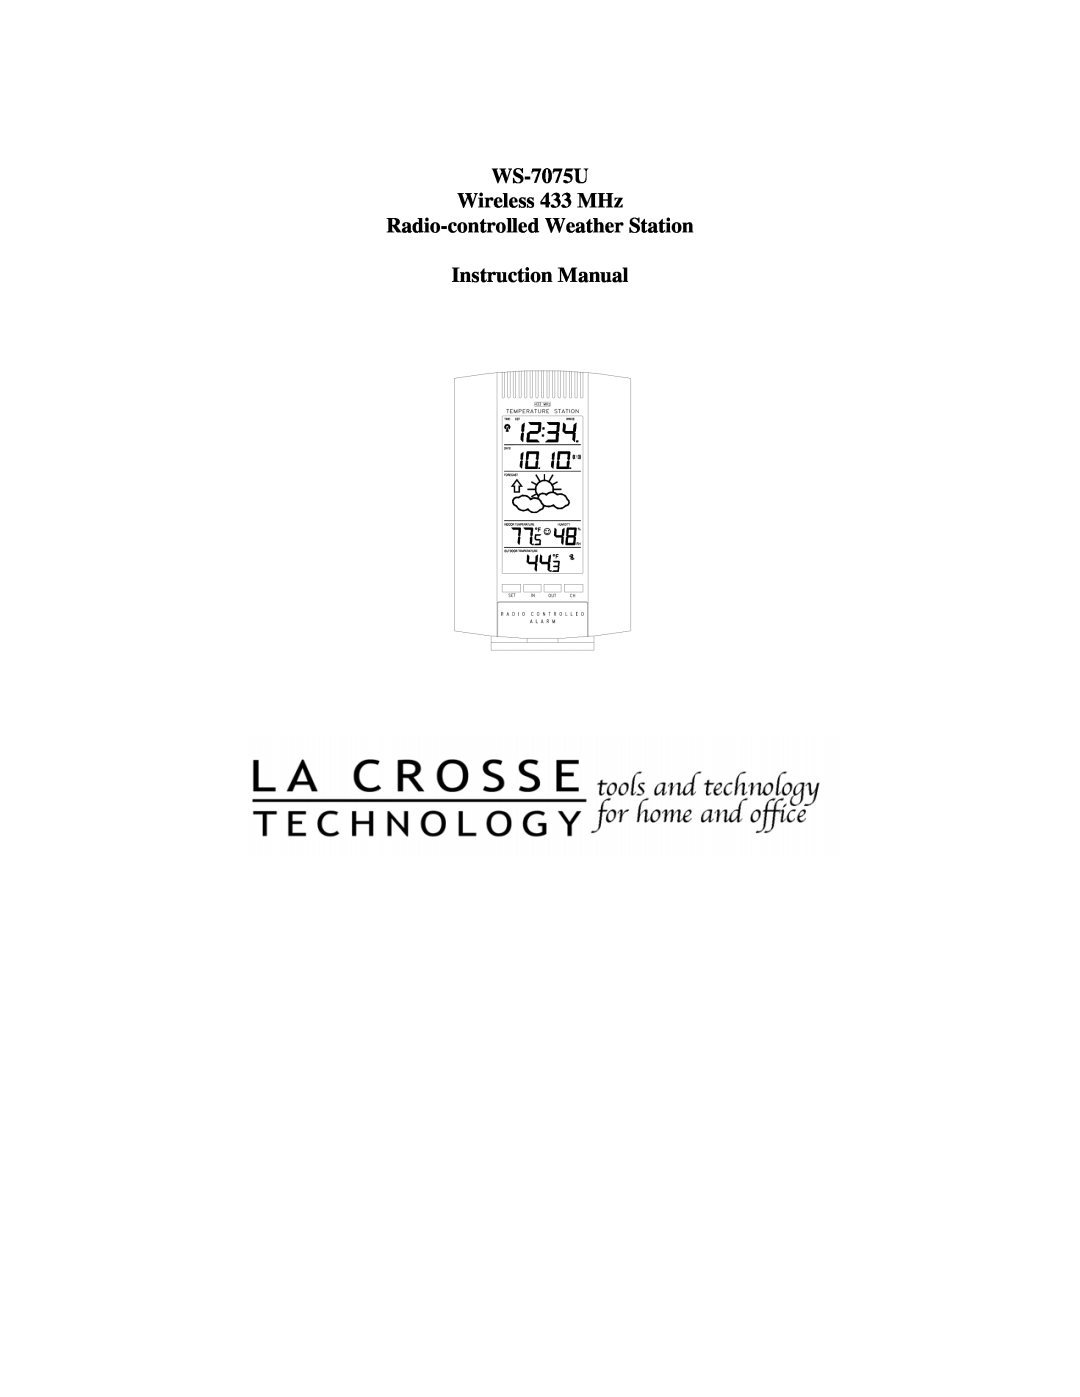 La Crosse Technology instruction manual WS-7075U Wireless 433 MHz Radio-controlled Weather Station, Instruction Manual 